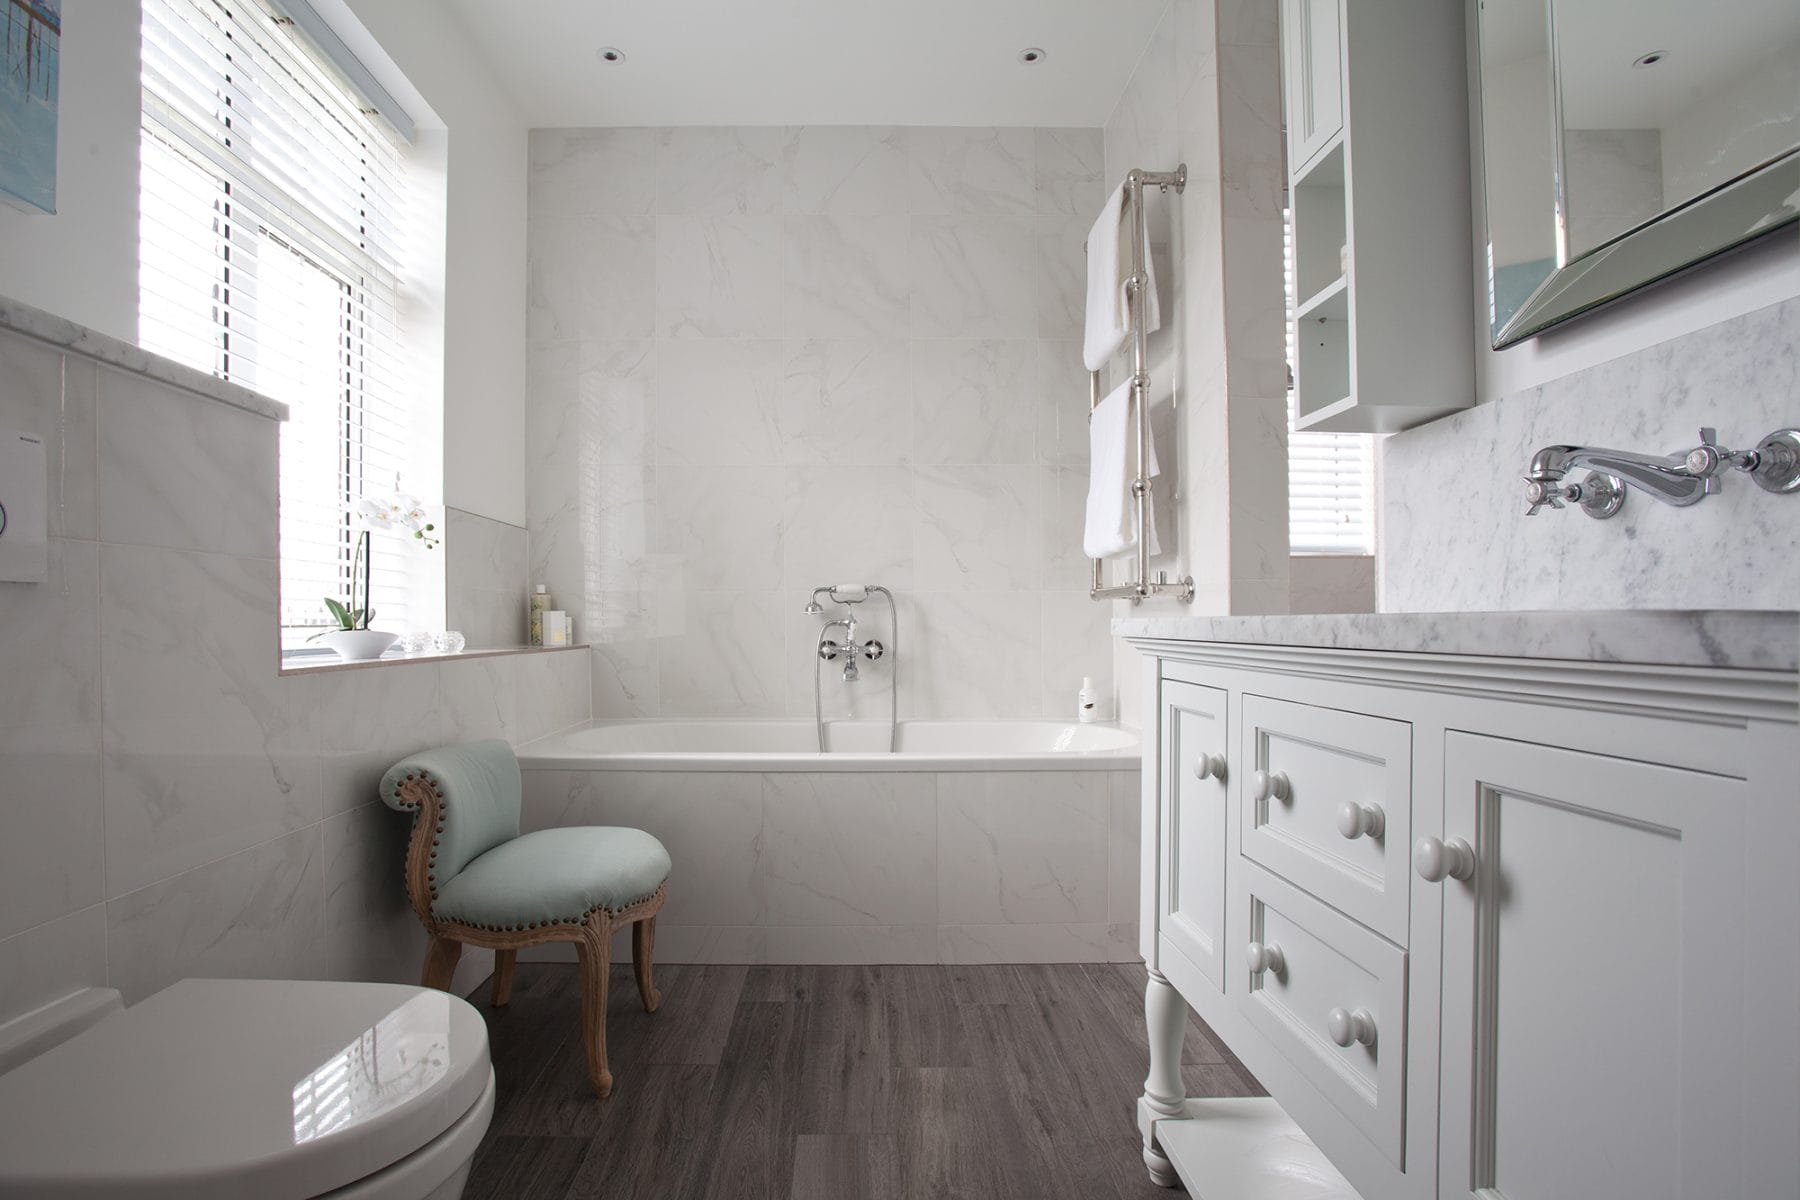 Image: Ensuite with enclosed wetroom in grey tones